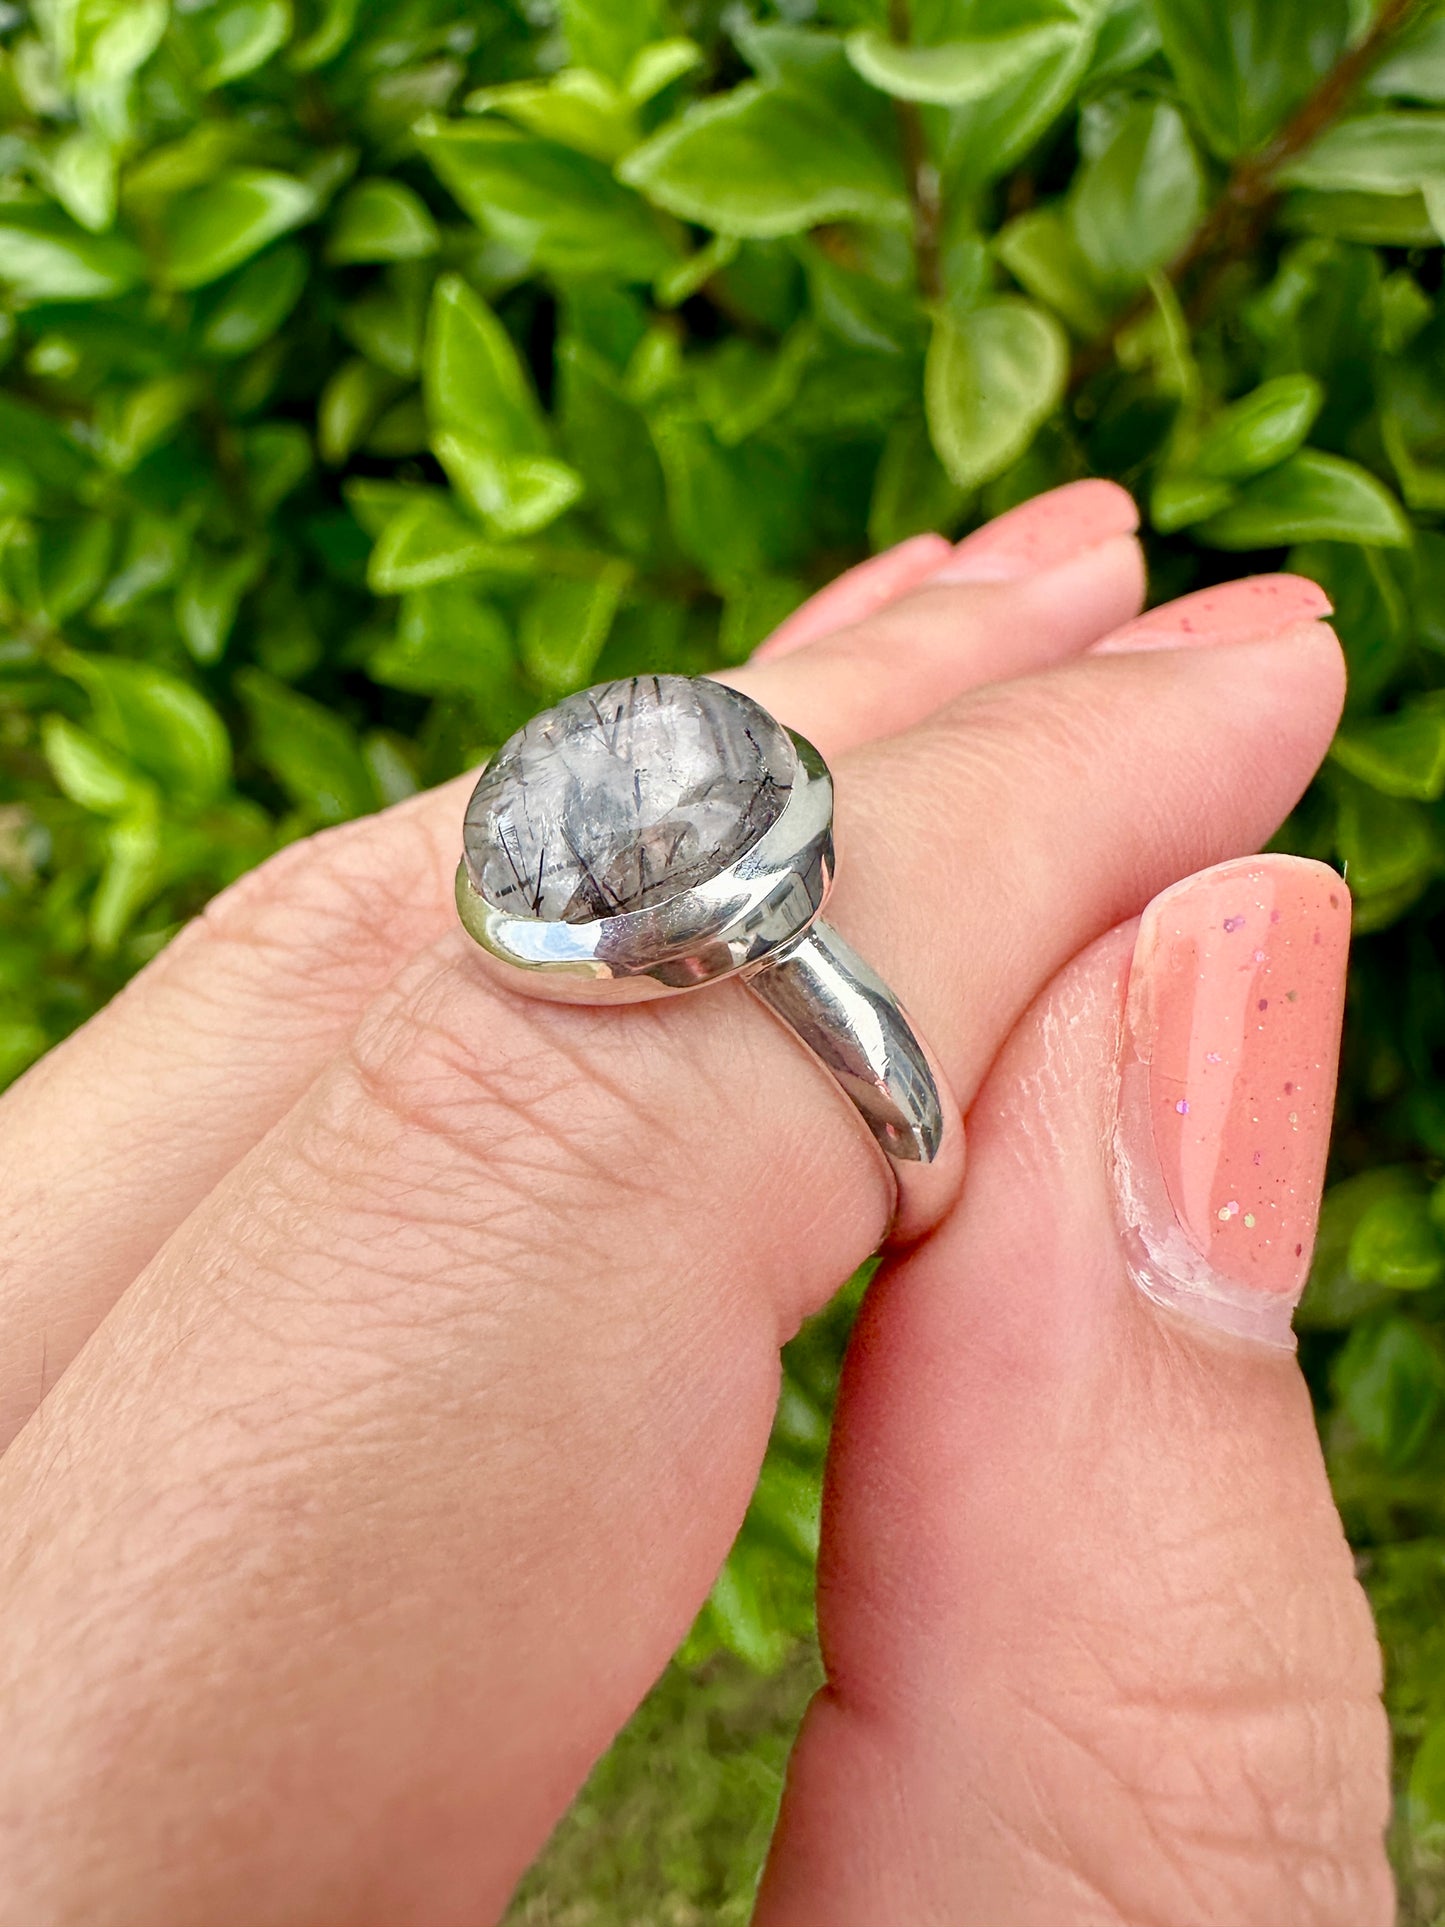 Striking Black Tourmaline in Quartz Ring, Sterling Silver Size 7 - Protective Stone, Elegant and Modern Jewelry, Unique Design